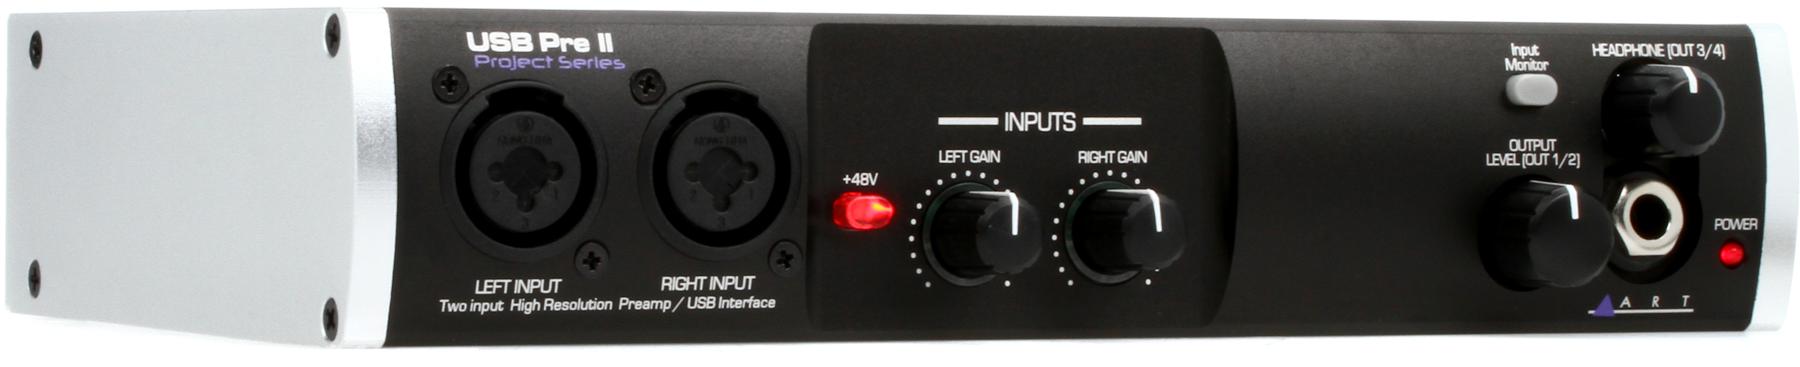 ART USB II 2x4 USB Audio Interface main image